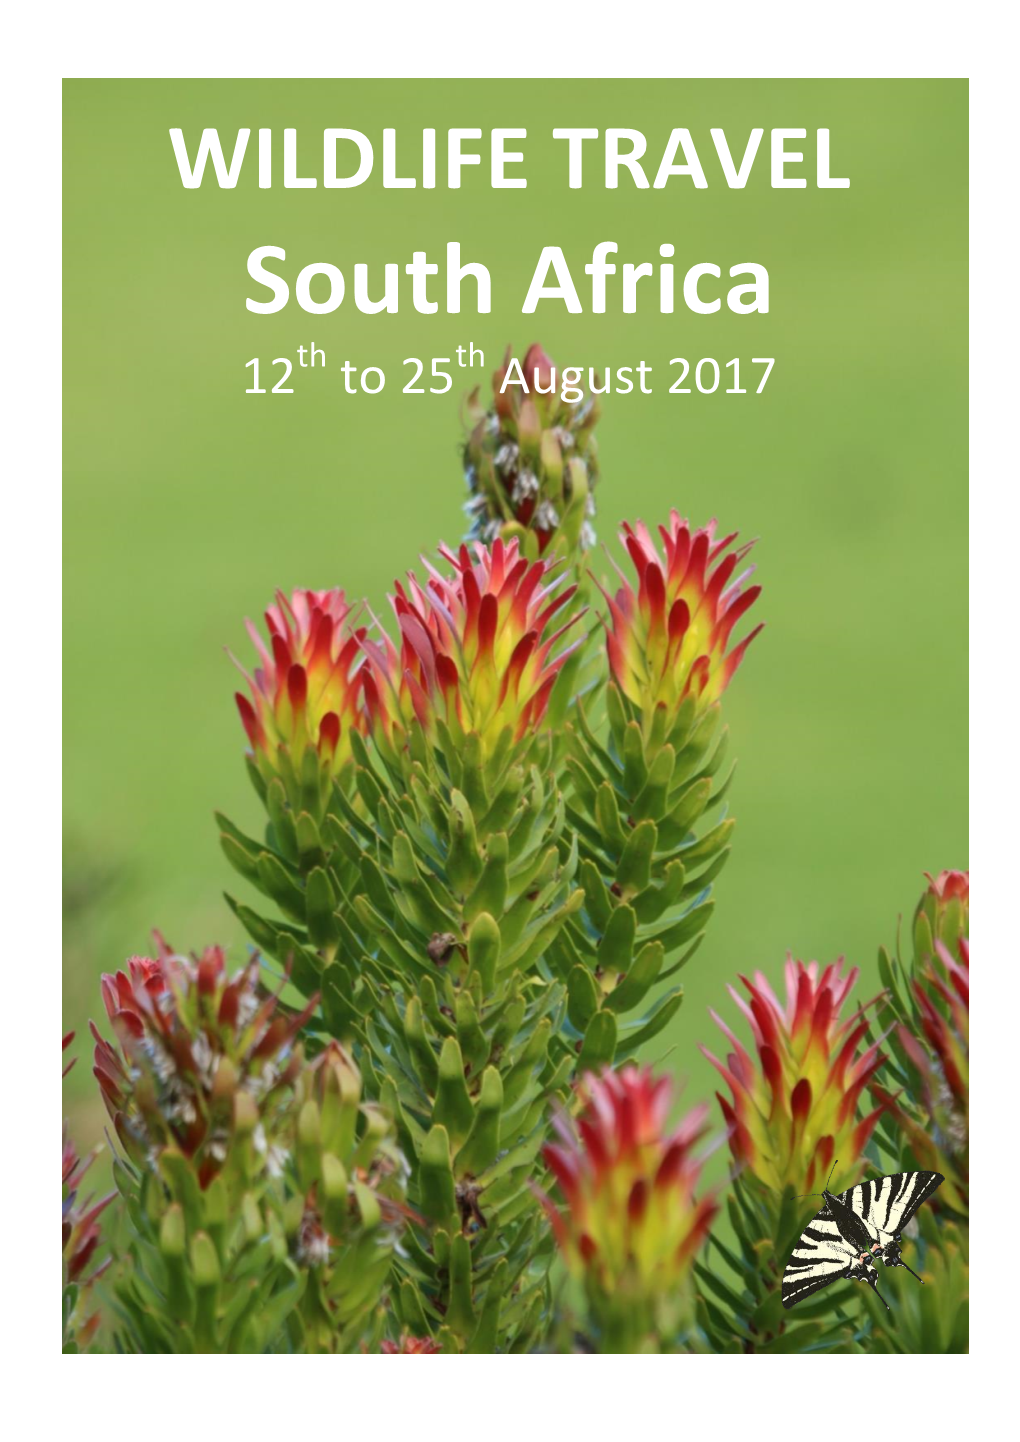 Wildlife Travel South Africa 2017